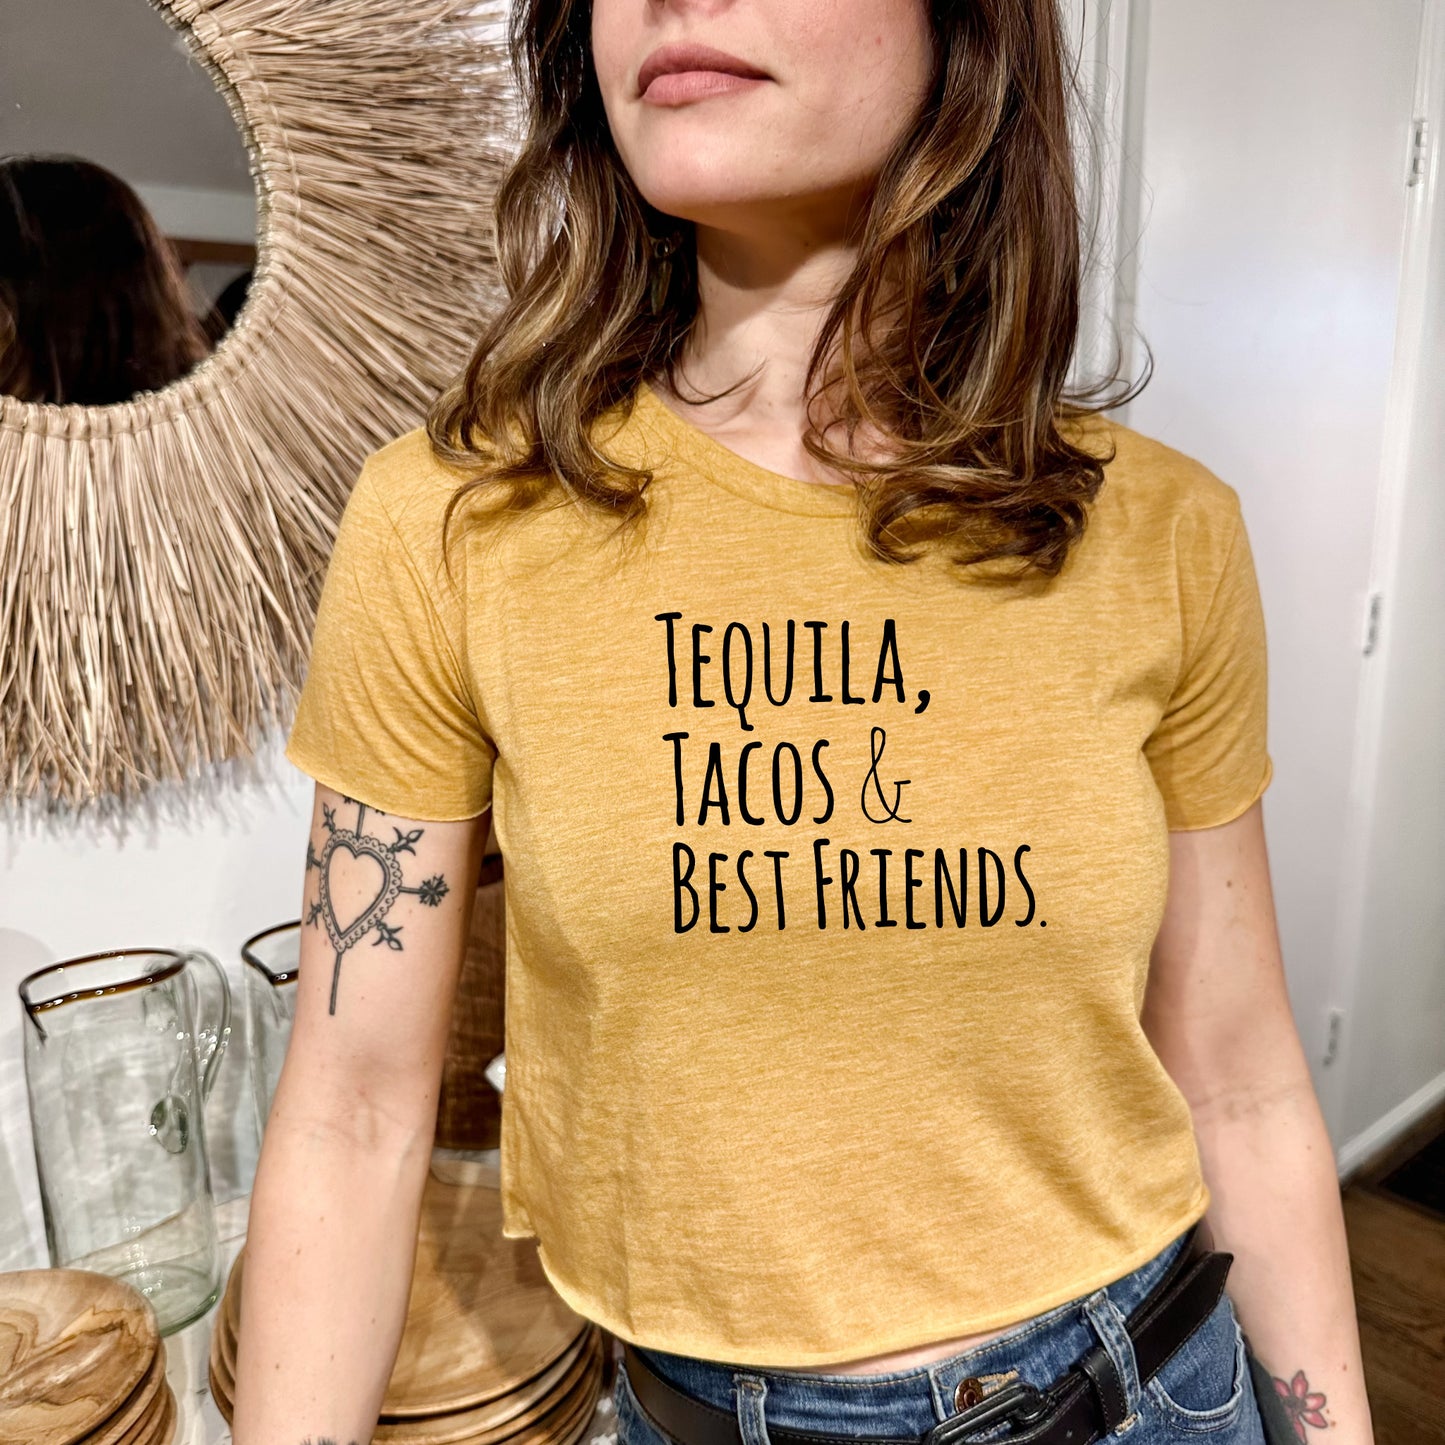 Tequila, Tacos, & Best Friends - Women's Crop Tee - Heather Gray or Gold